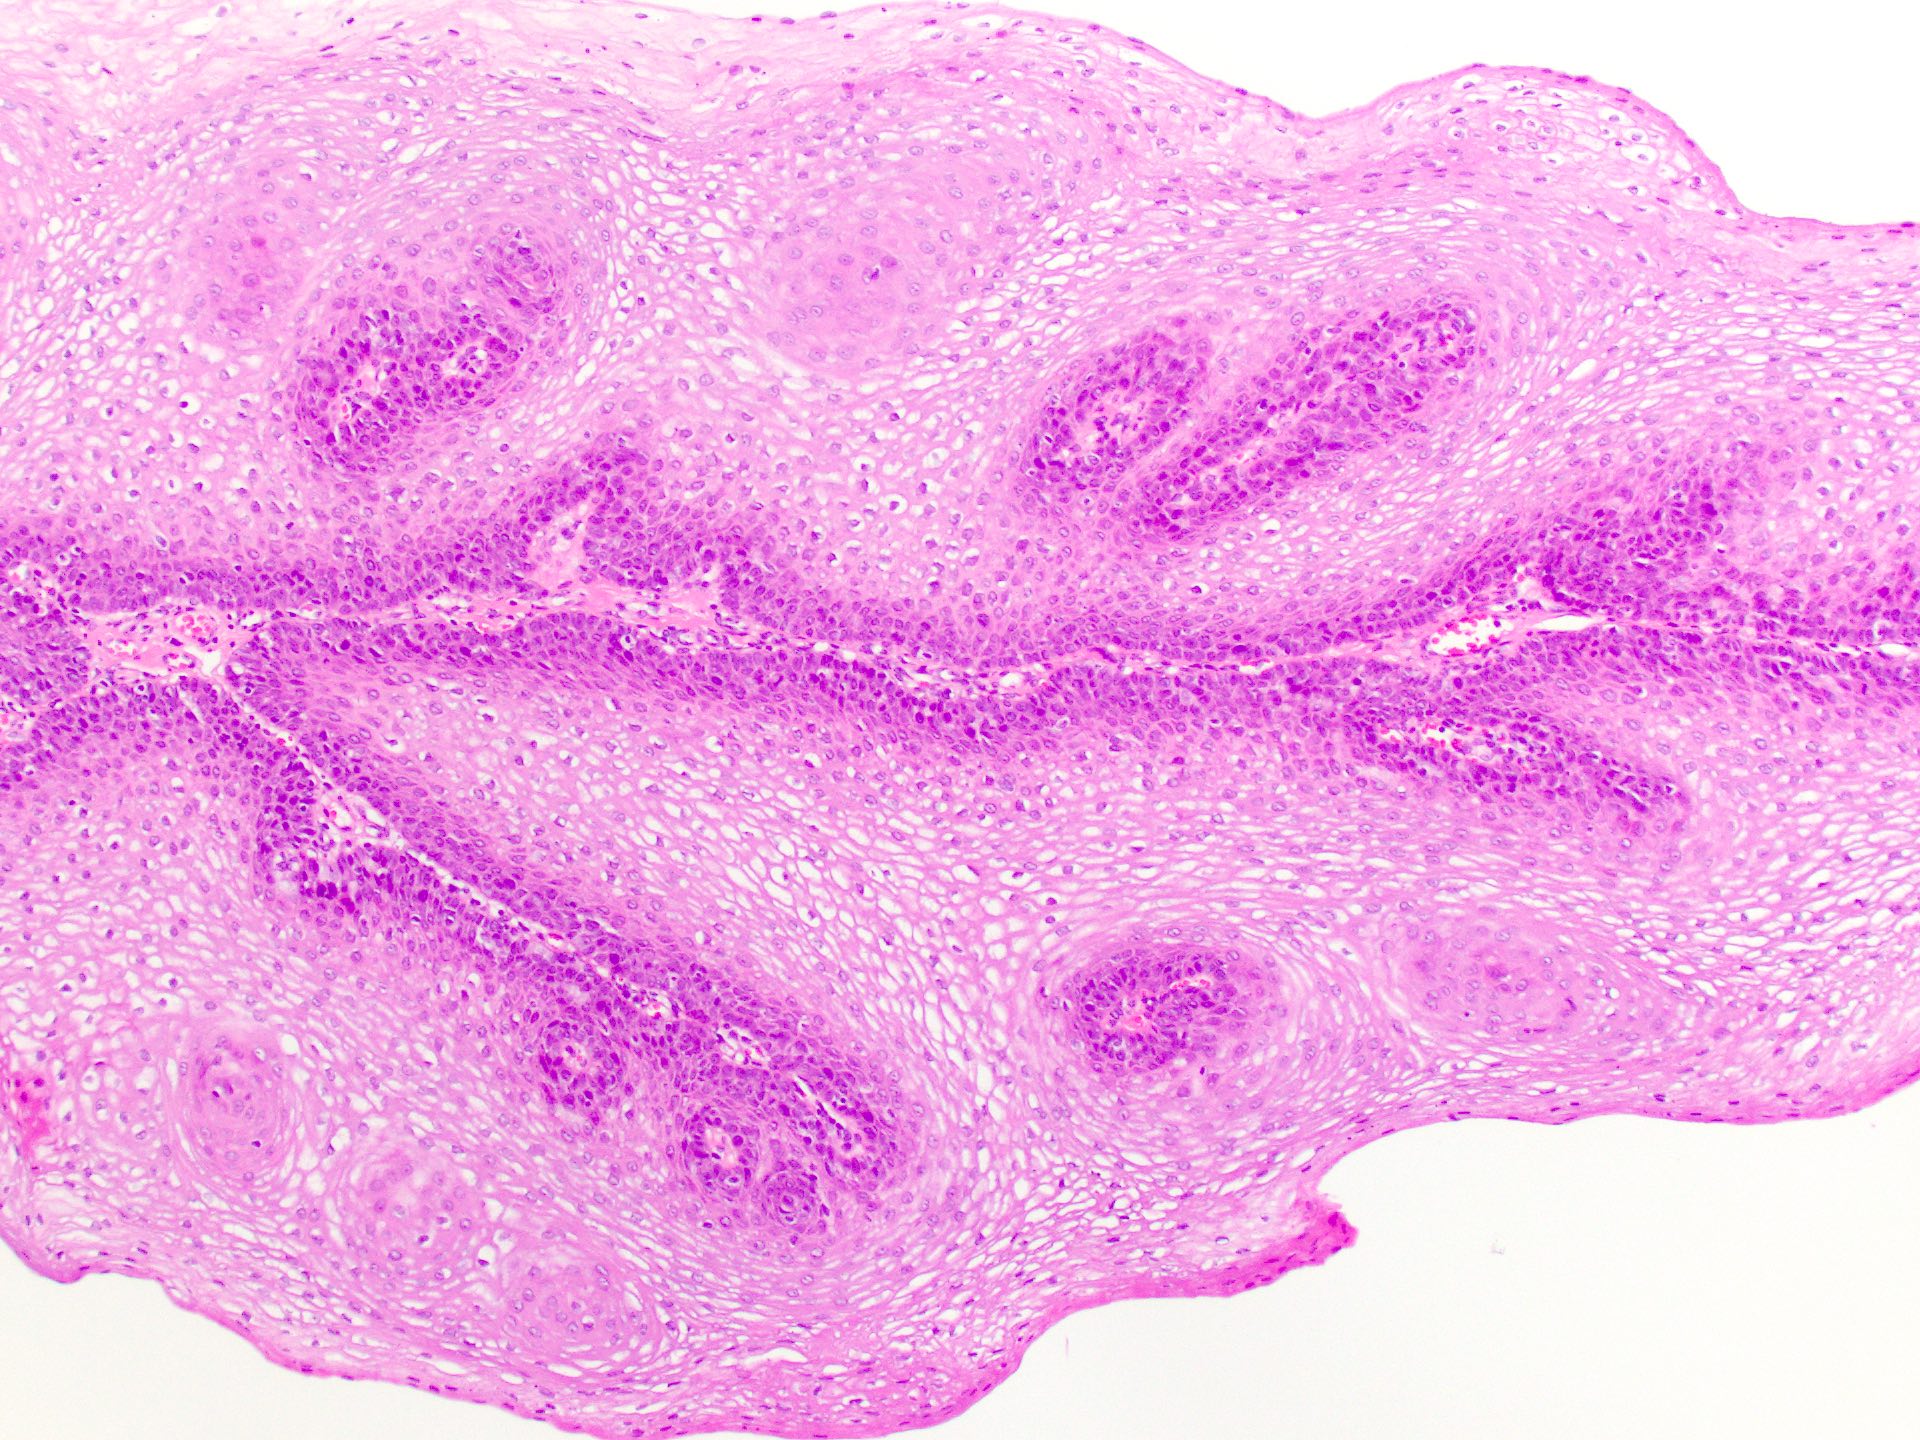 laryngeal papillomatosis pathology outlines)